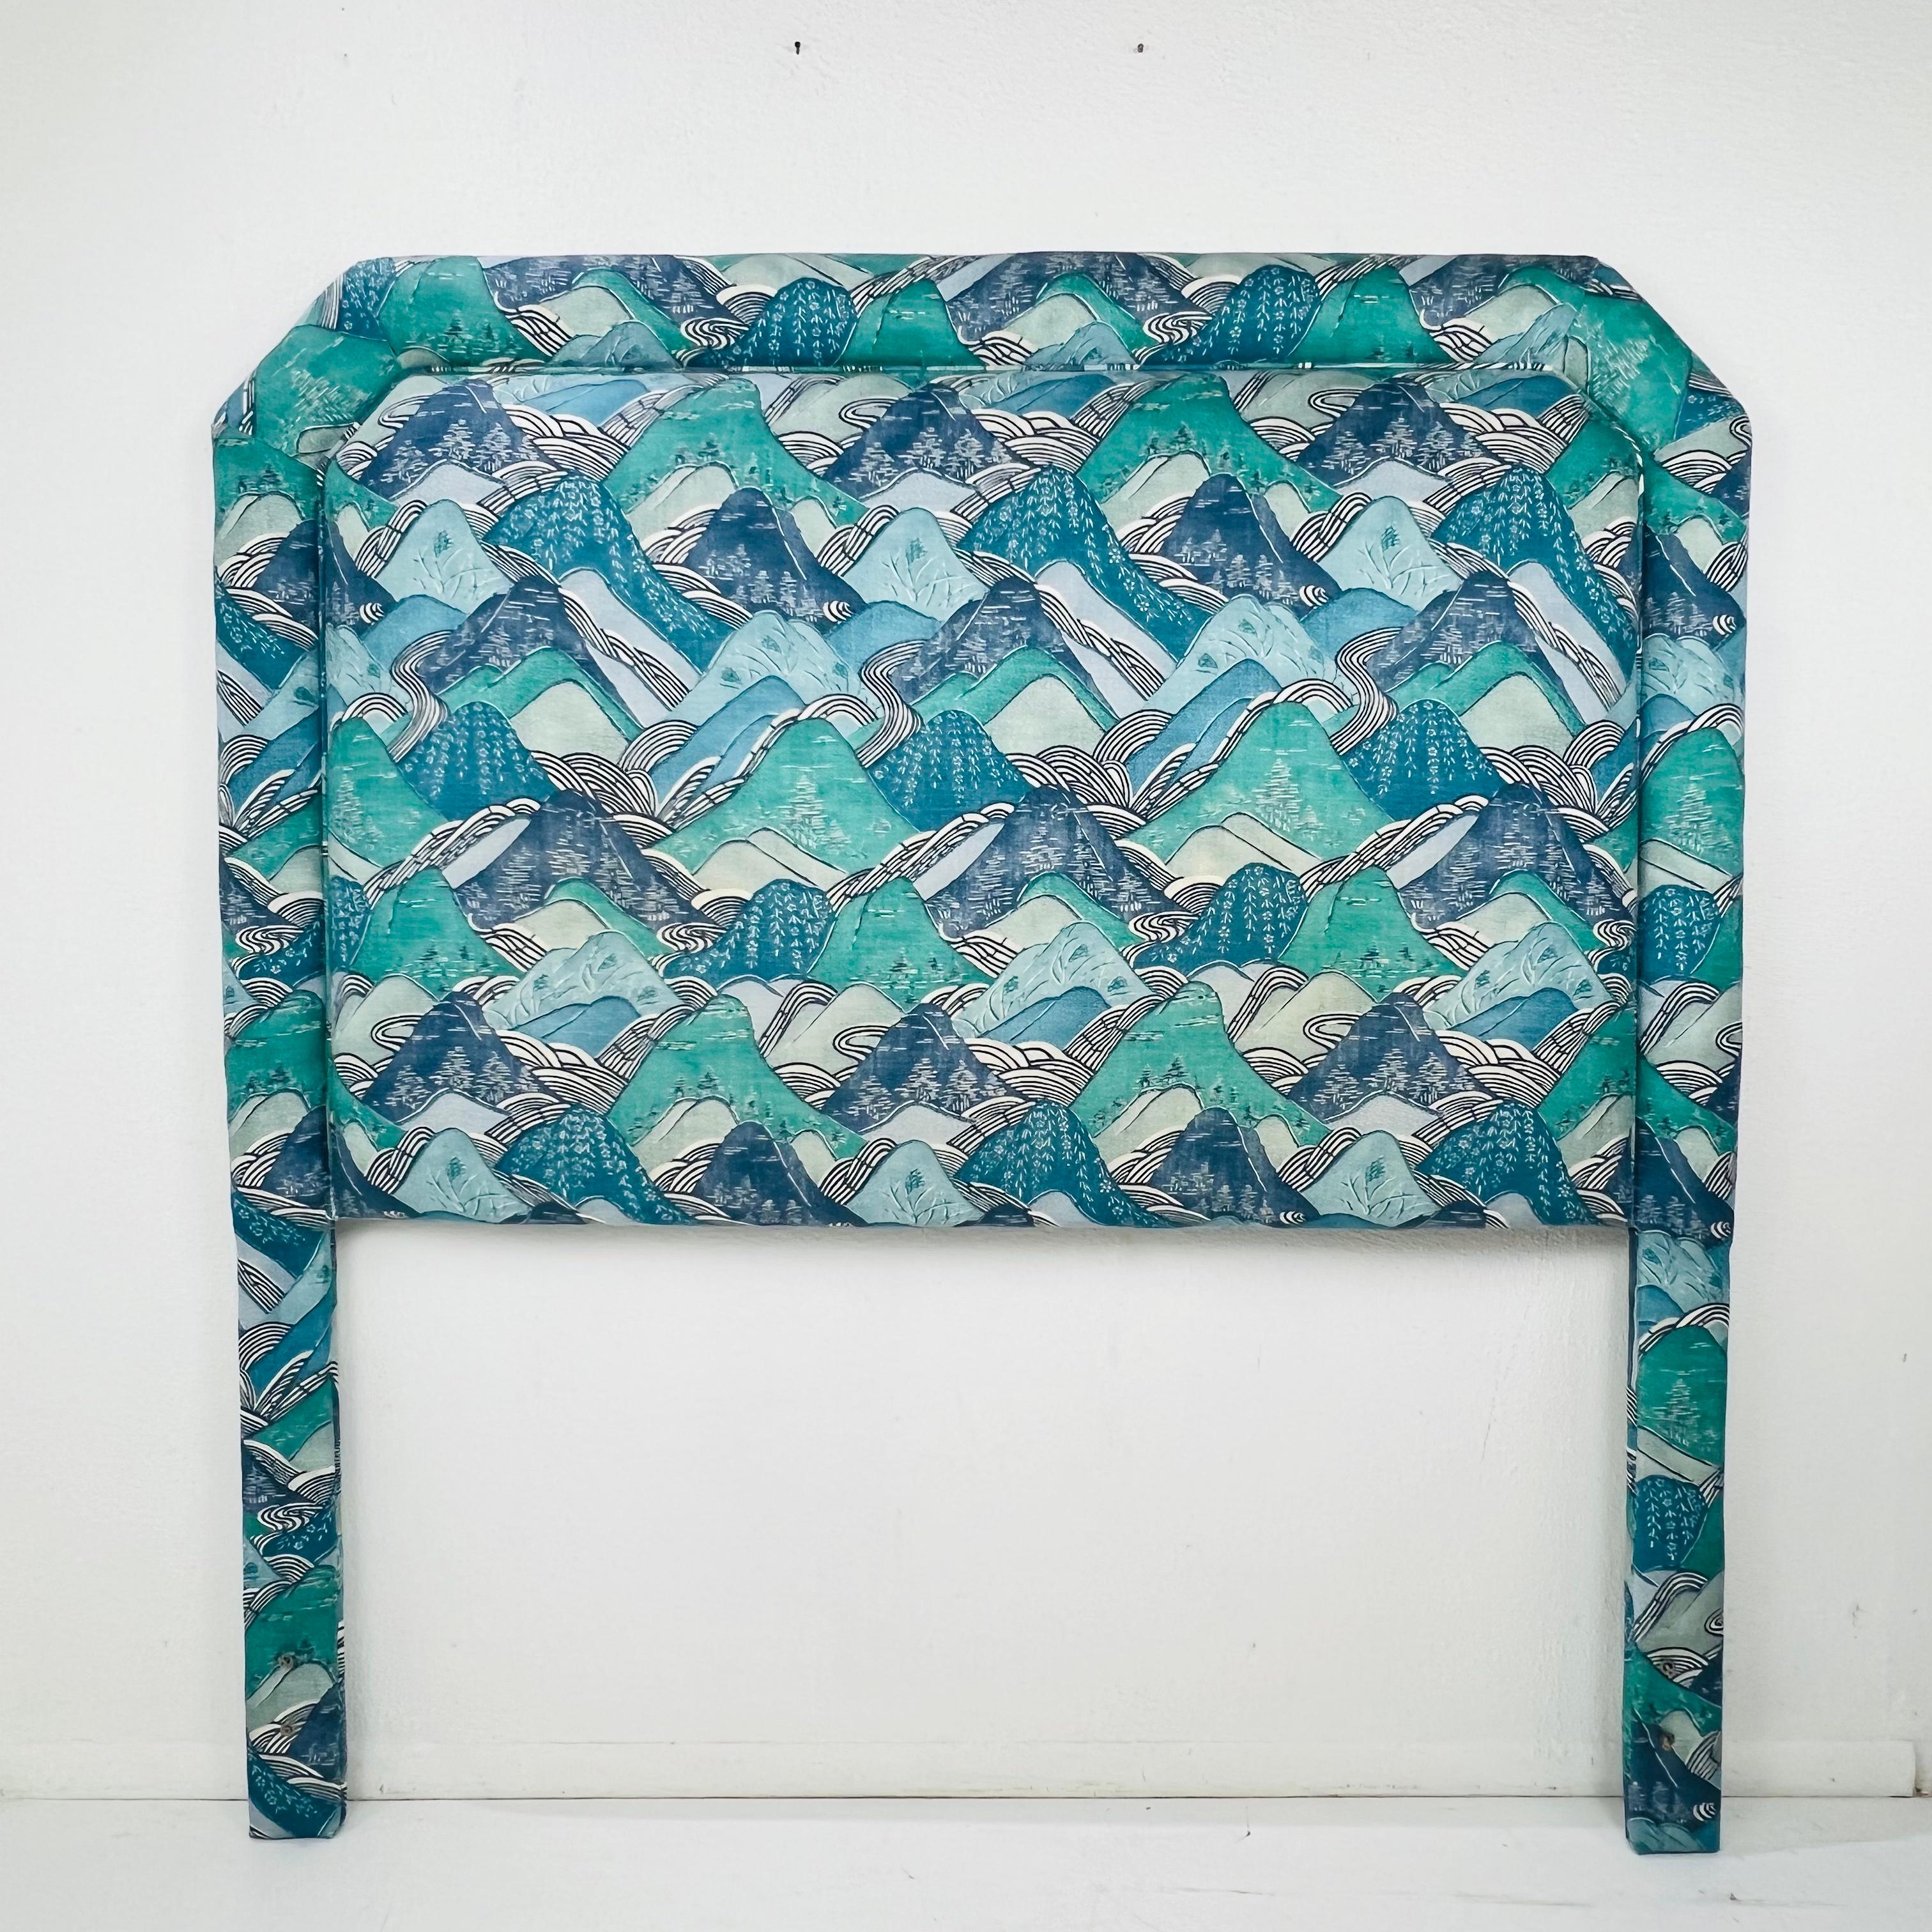 Queen Headboard Upholstered in Teal/Blue Kelly Wearstler Fabric For Sale 3